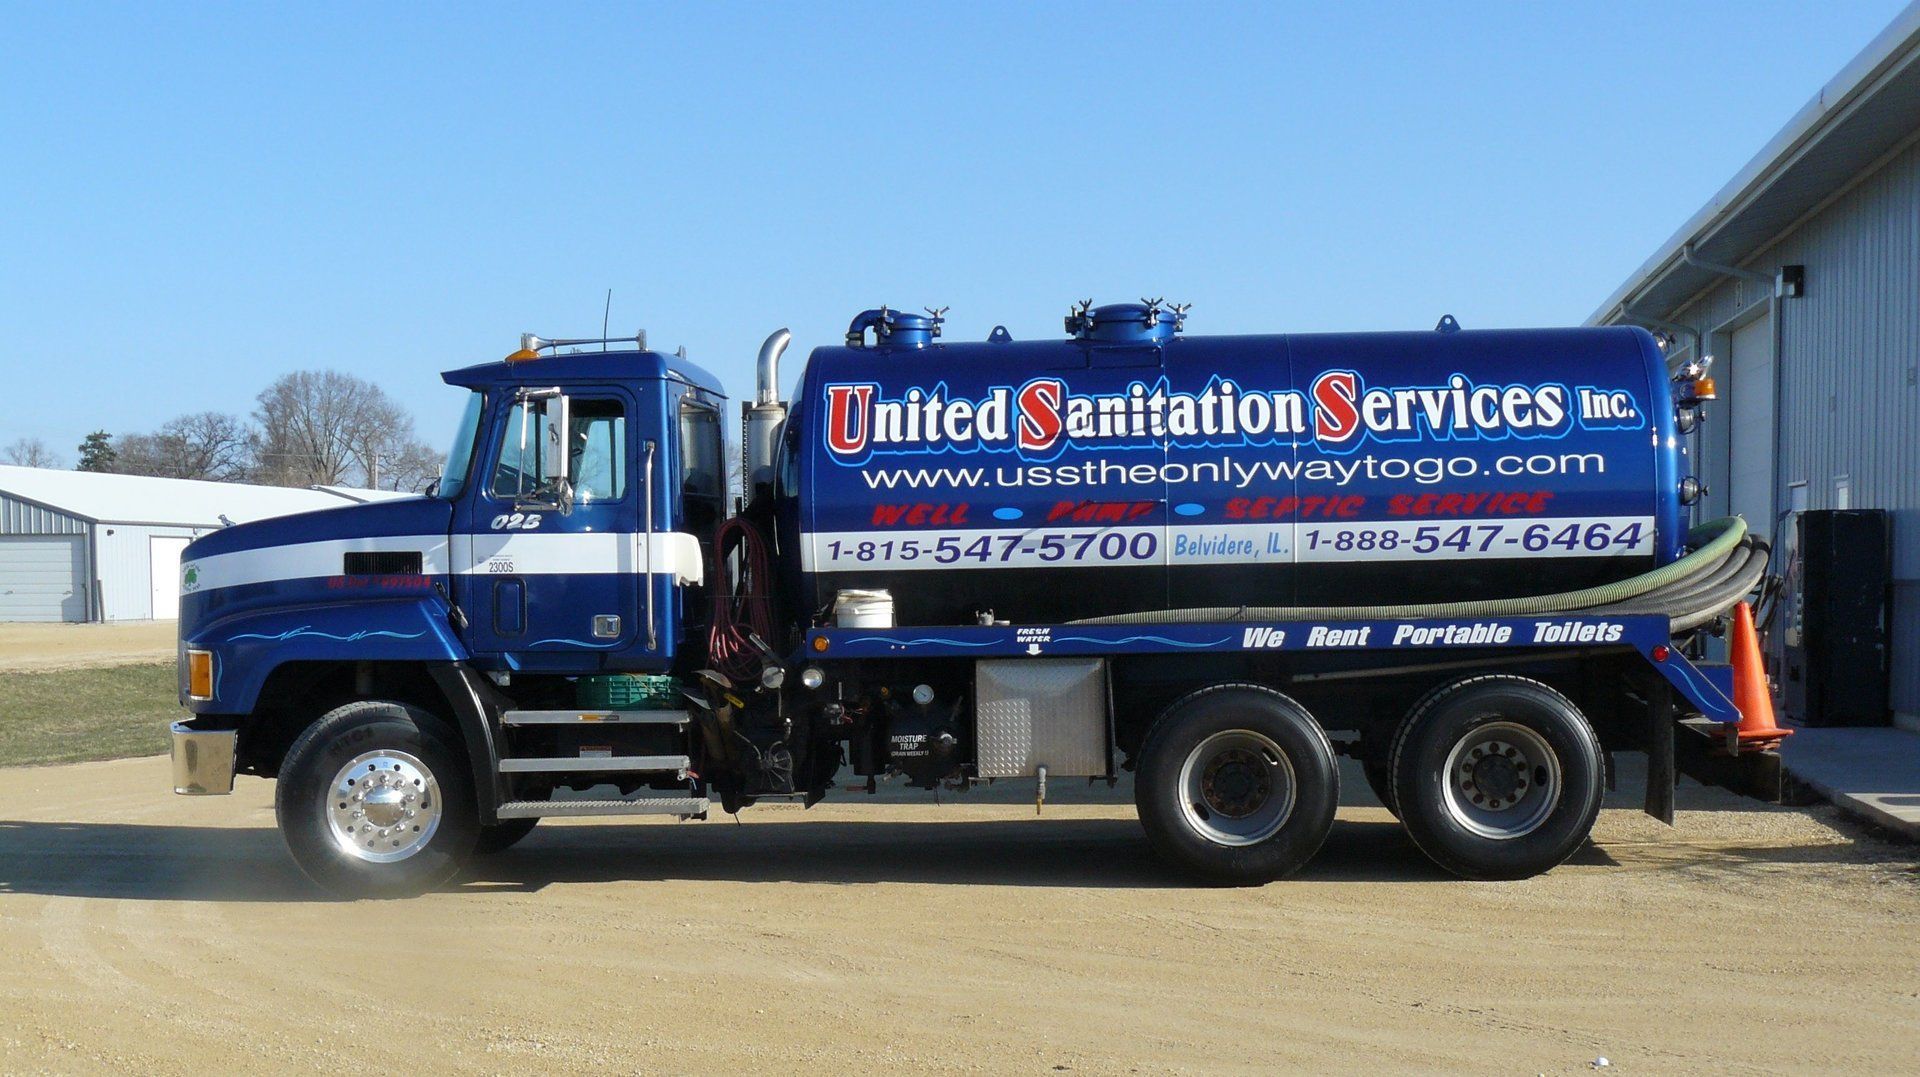 United Sanitation Services truck